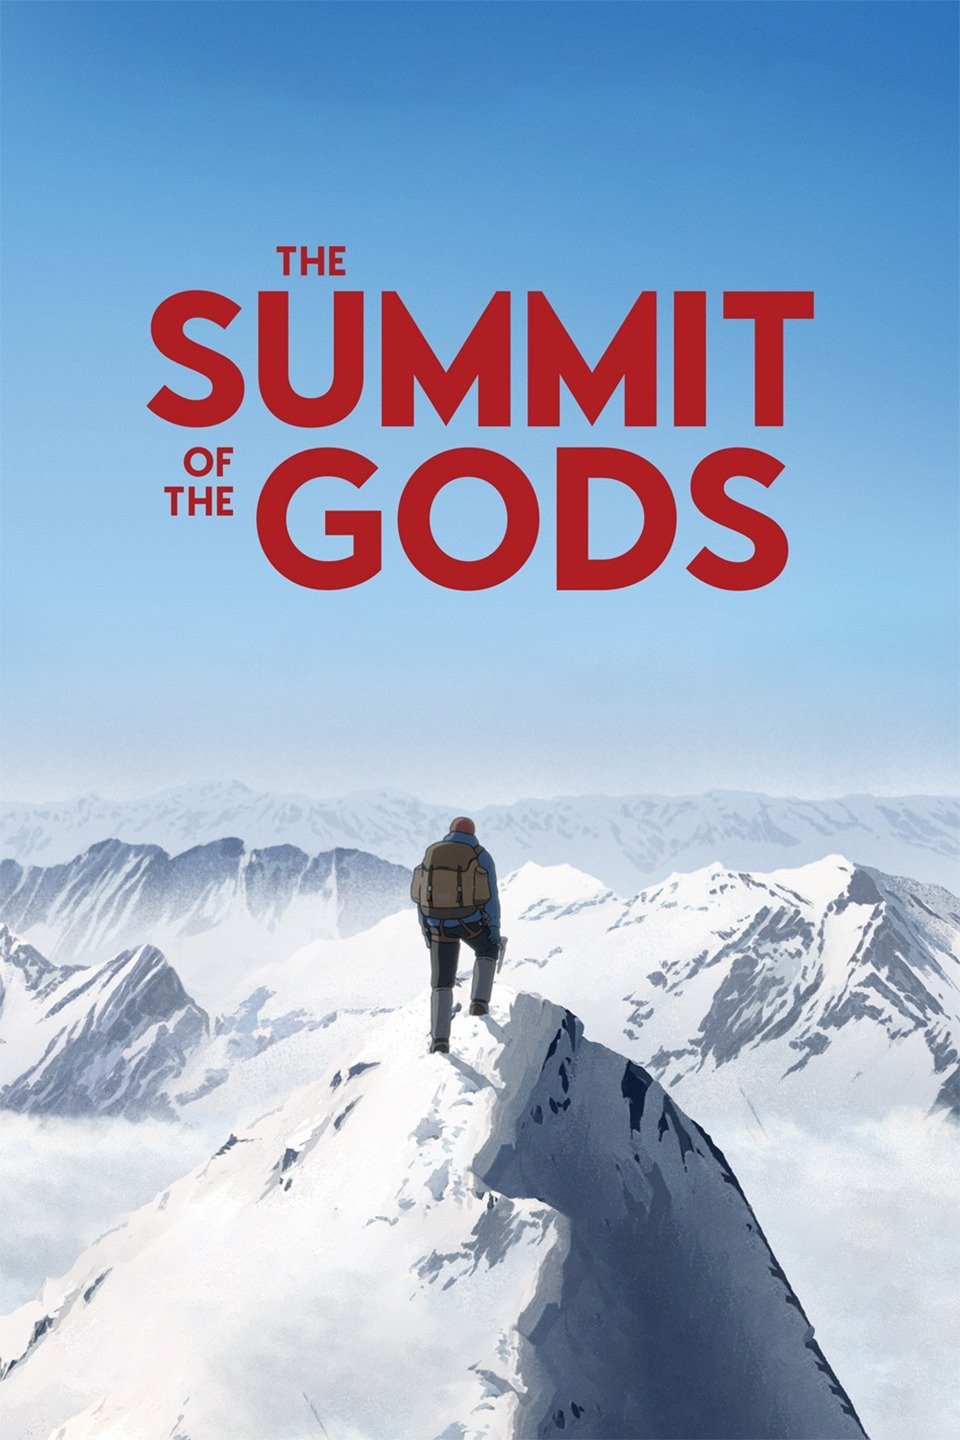 [MINI Super-HQ] The Summit of the Gods (2021) เหล่าเทพภูผา [1080p] [NETFLIX] [พากย์ไทย 5.1 + เสียงฝรั่งเศส 5.1] [บรรยายไทย + อังกฤษ] [เสียงไทย + ซับไทย] [USERLOAD]